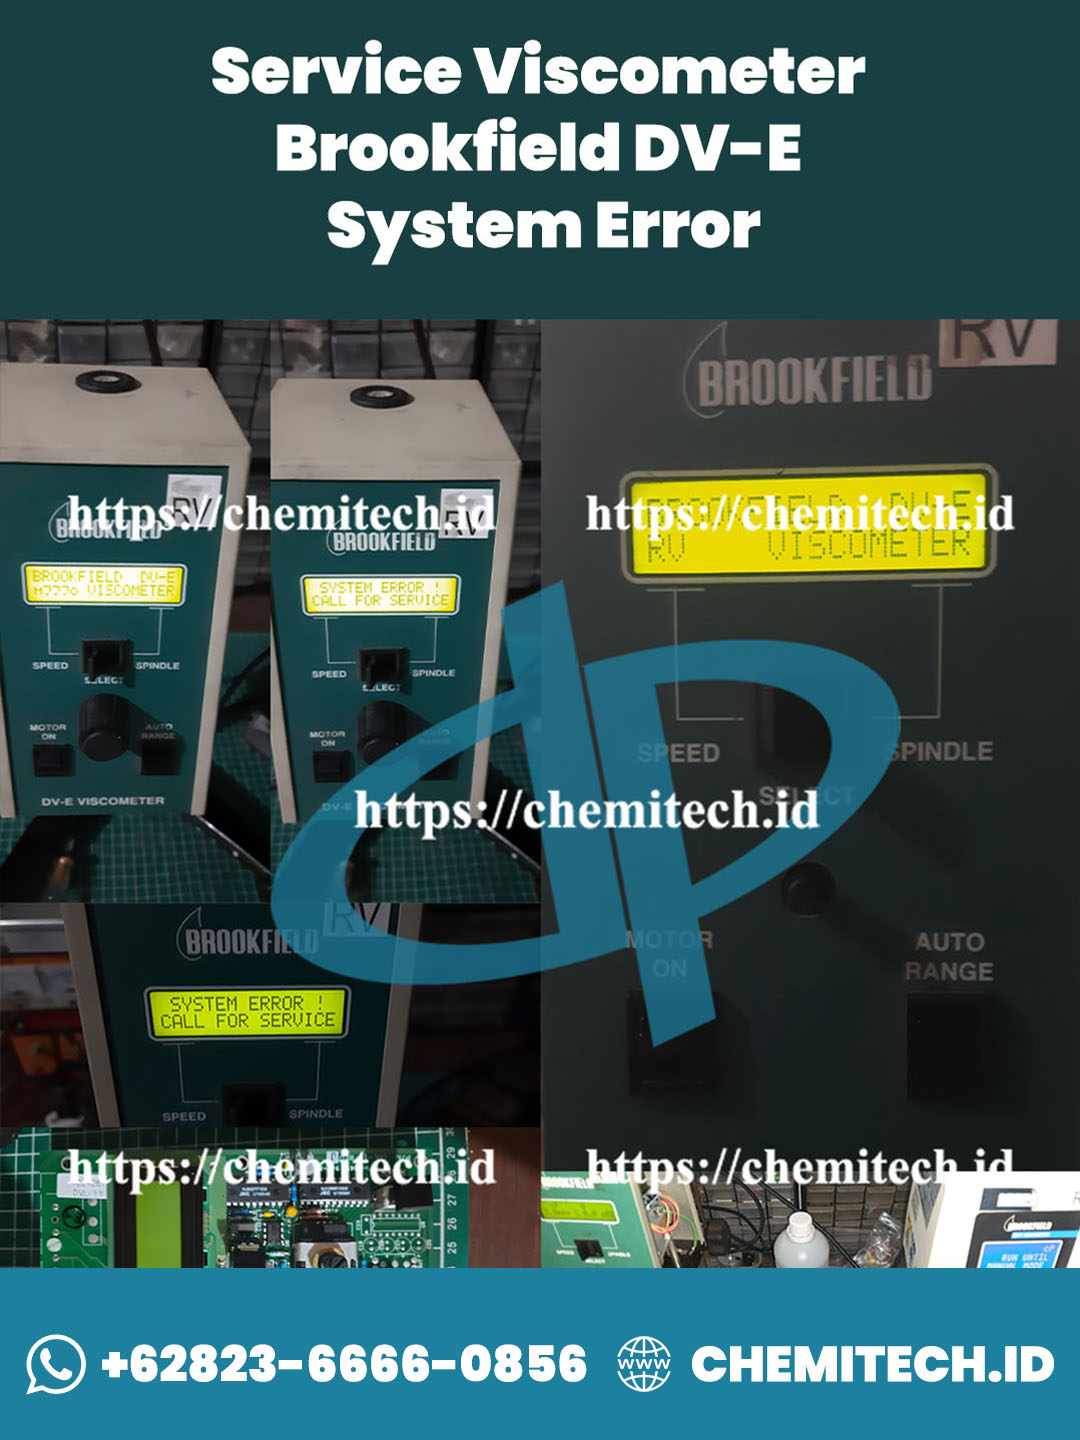 Web Stories - Service Viscometer Brookfield DV-E System Error